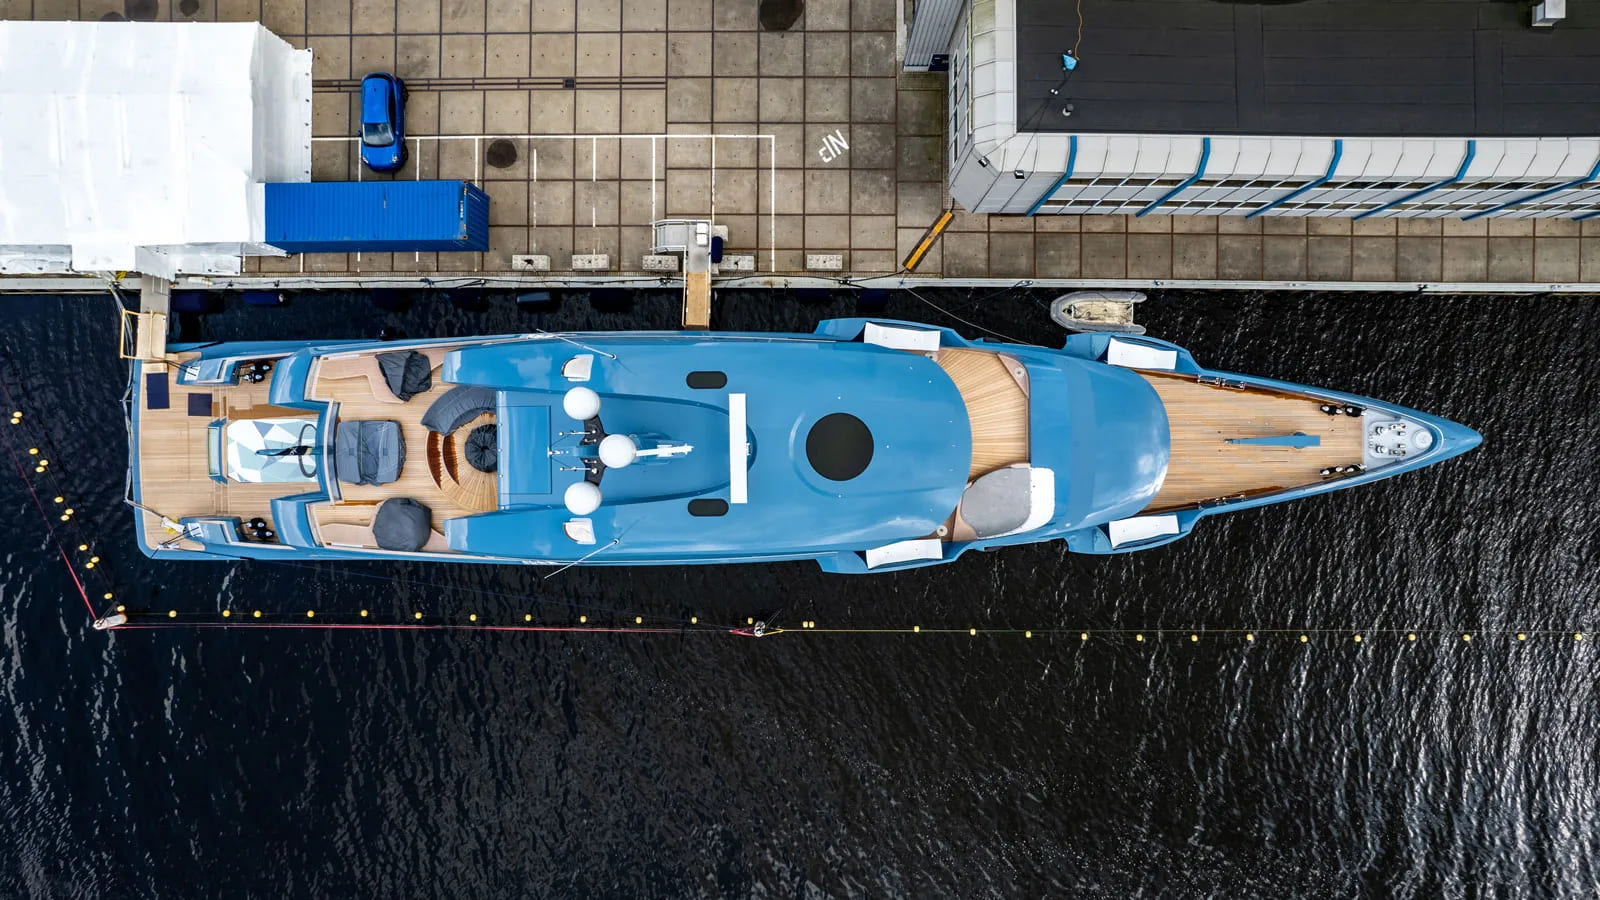 Superyacht PHI Royal Huisman Guy Fleury - boat shopping